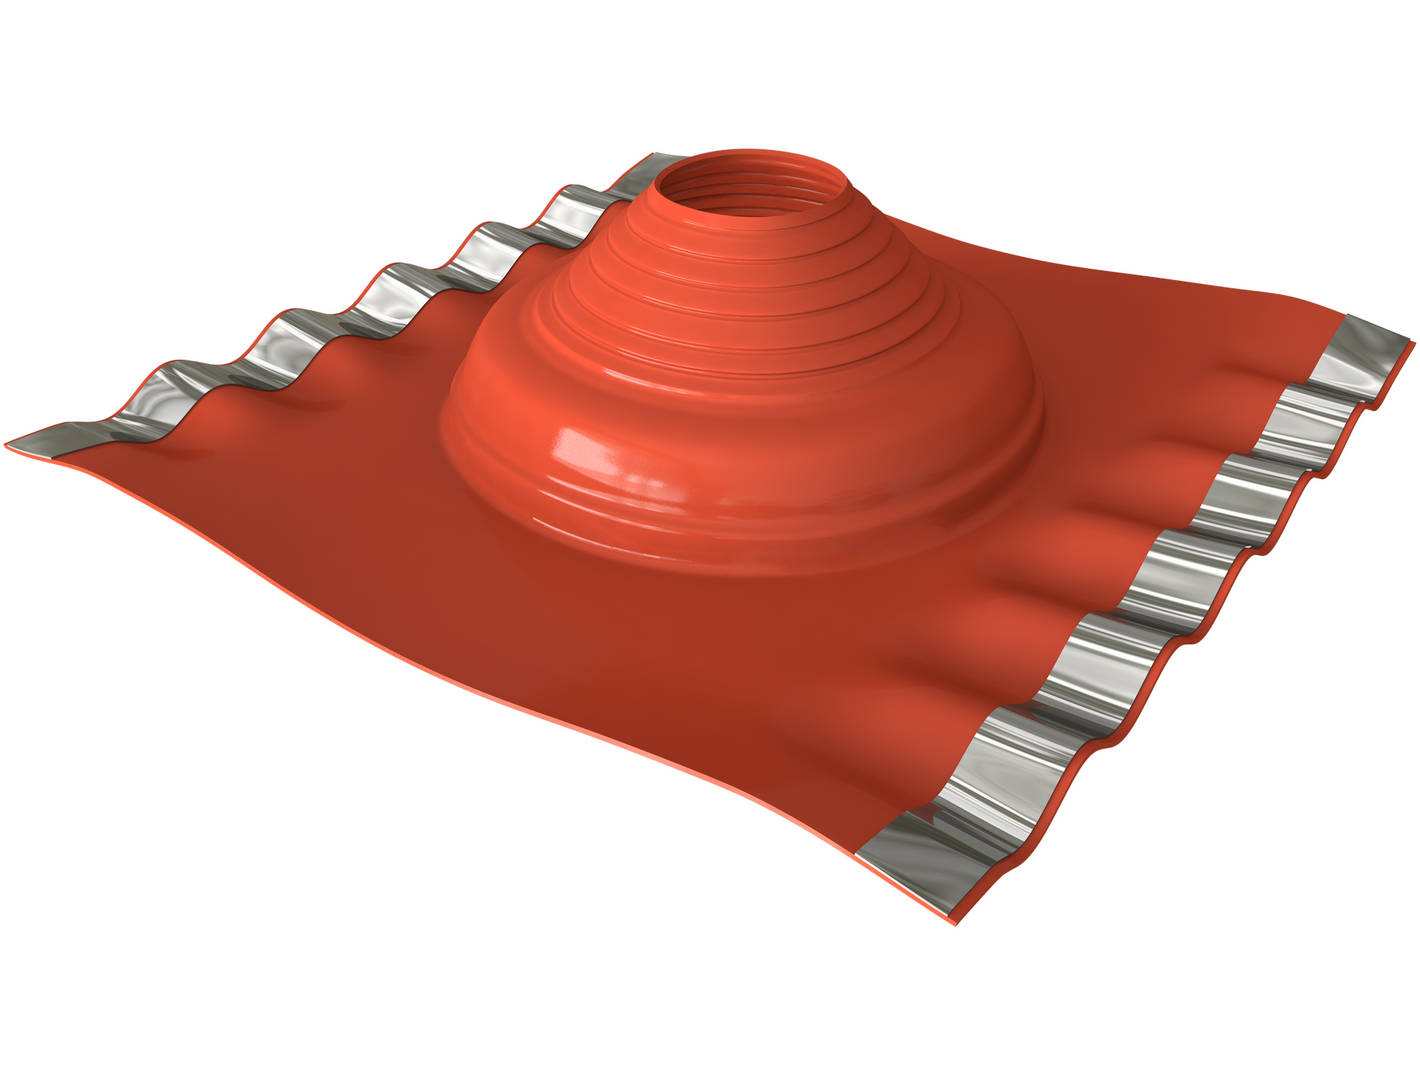 Dektite® Diverter EPDM Pipe Flashing For Metal Roofs - Red (254- 406mm)